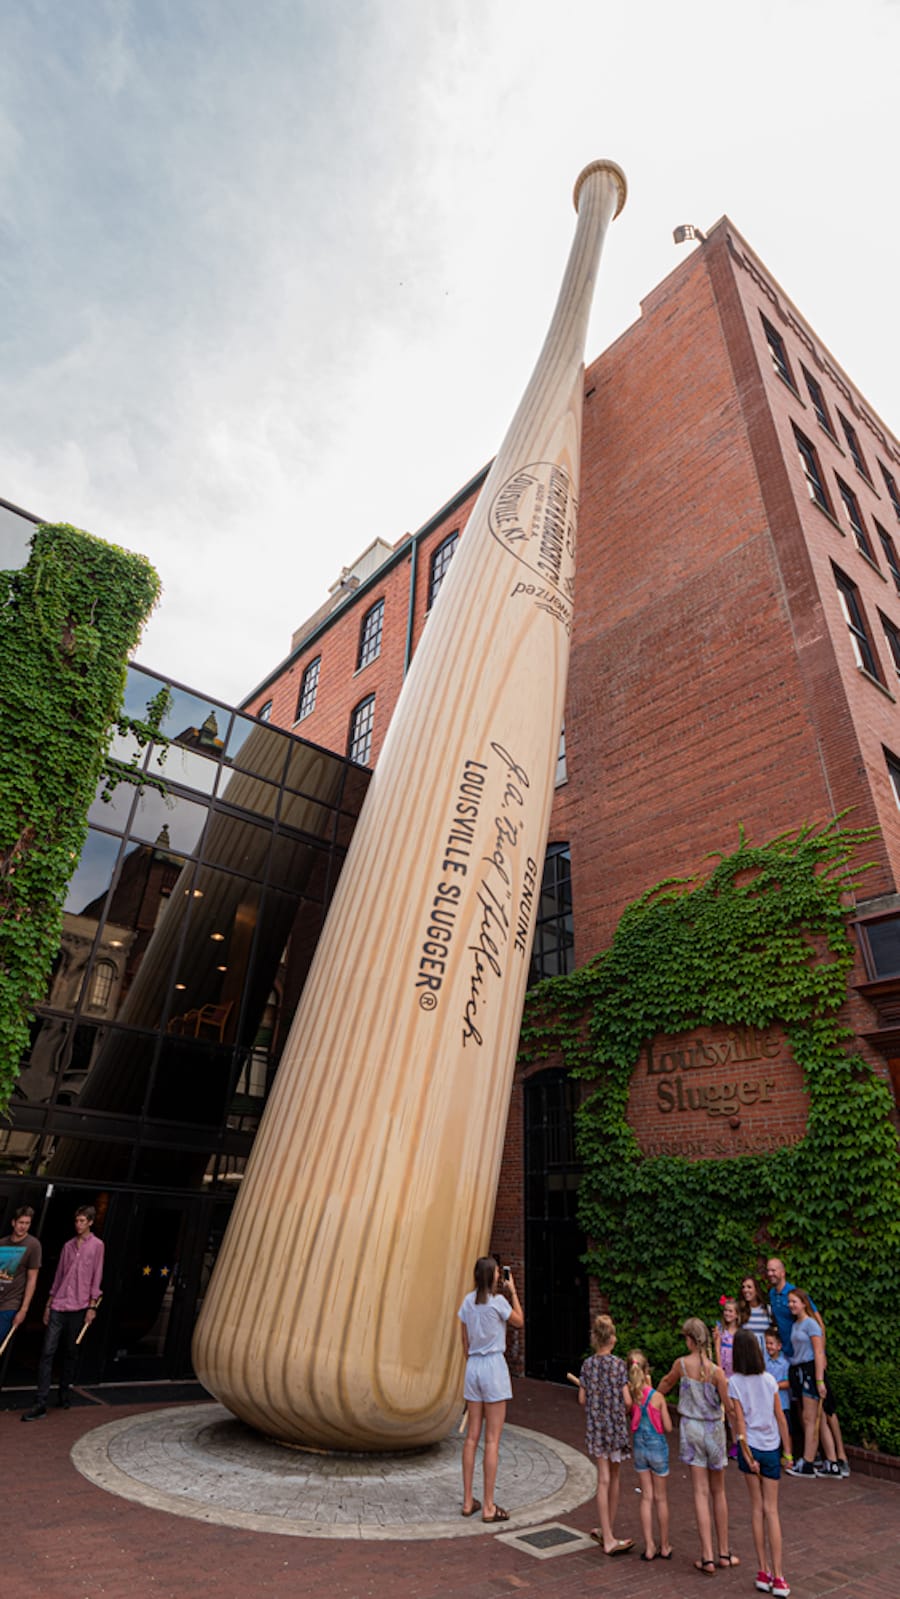 the famous bat in Louisville, a destination idea for a romantic weekend getaway.